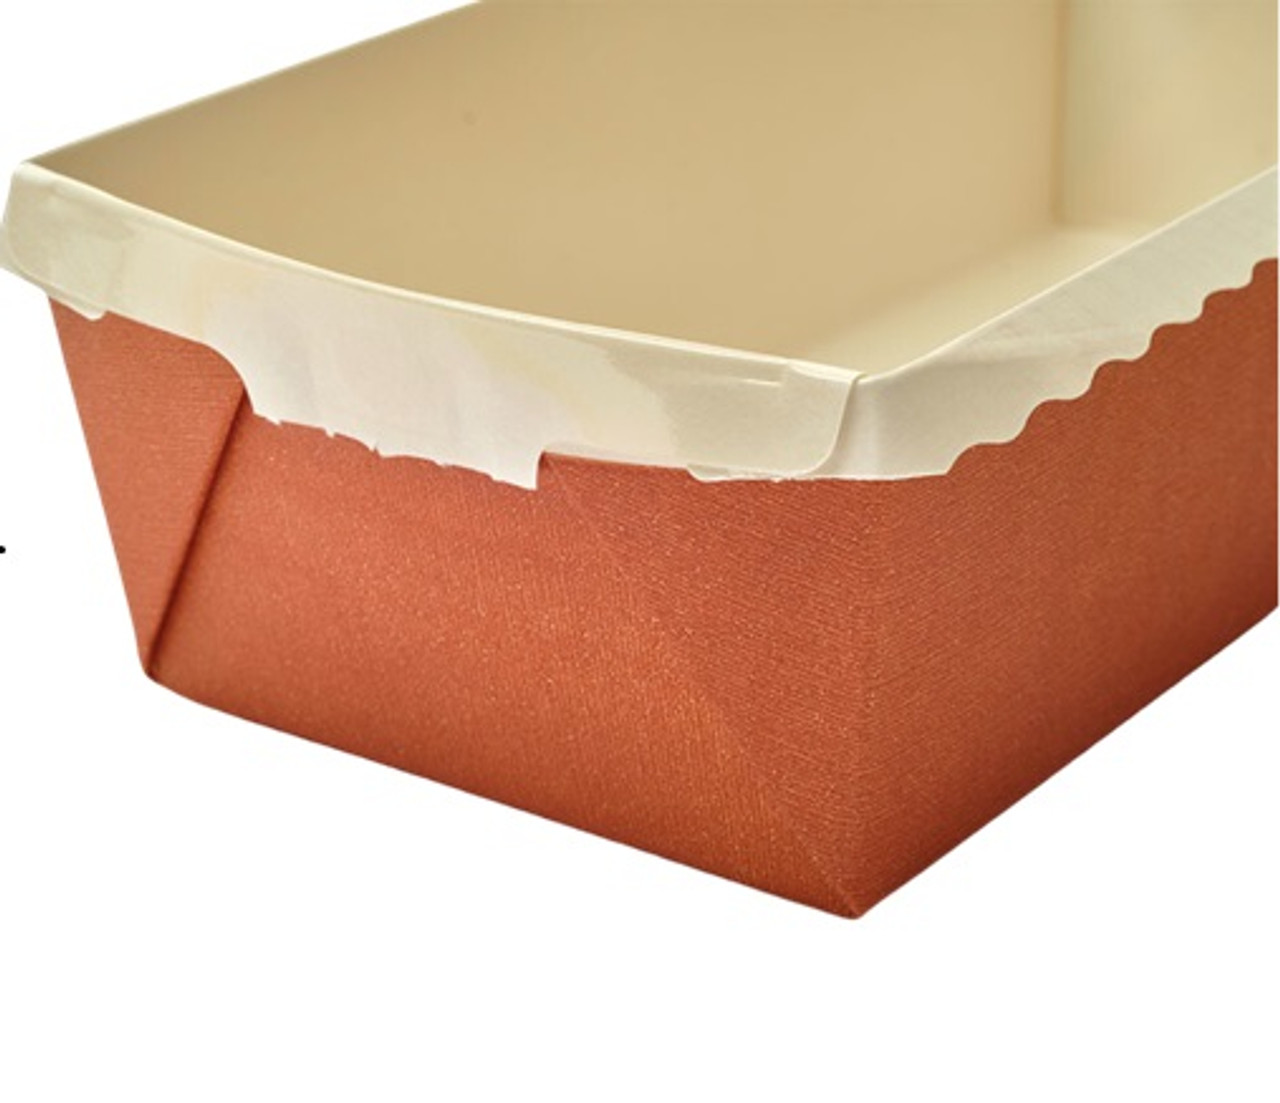 Plum Cake Baking Molds in Terracotta Cardboard 199 x 95 x 55mm 